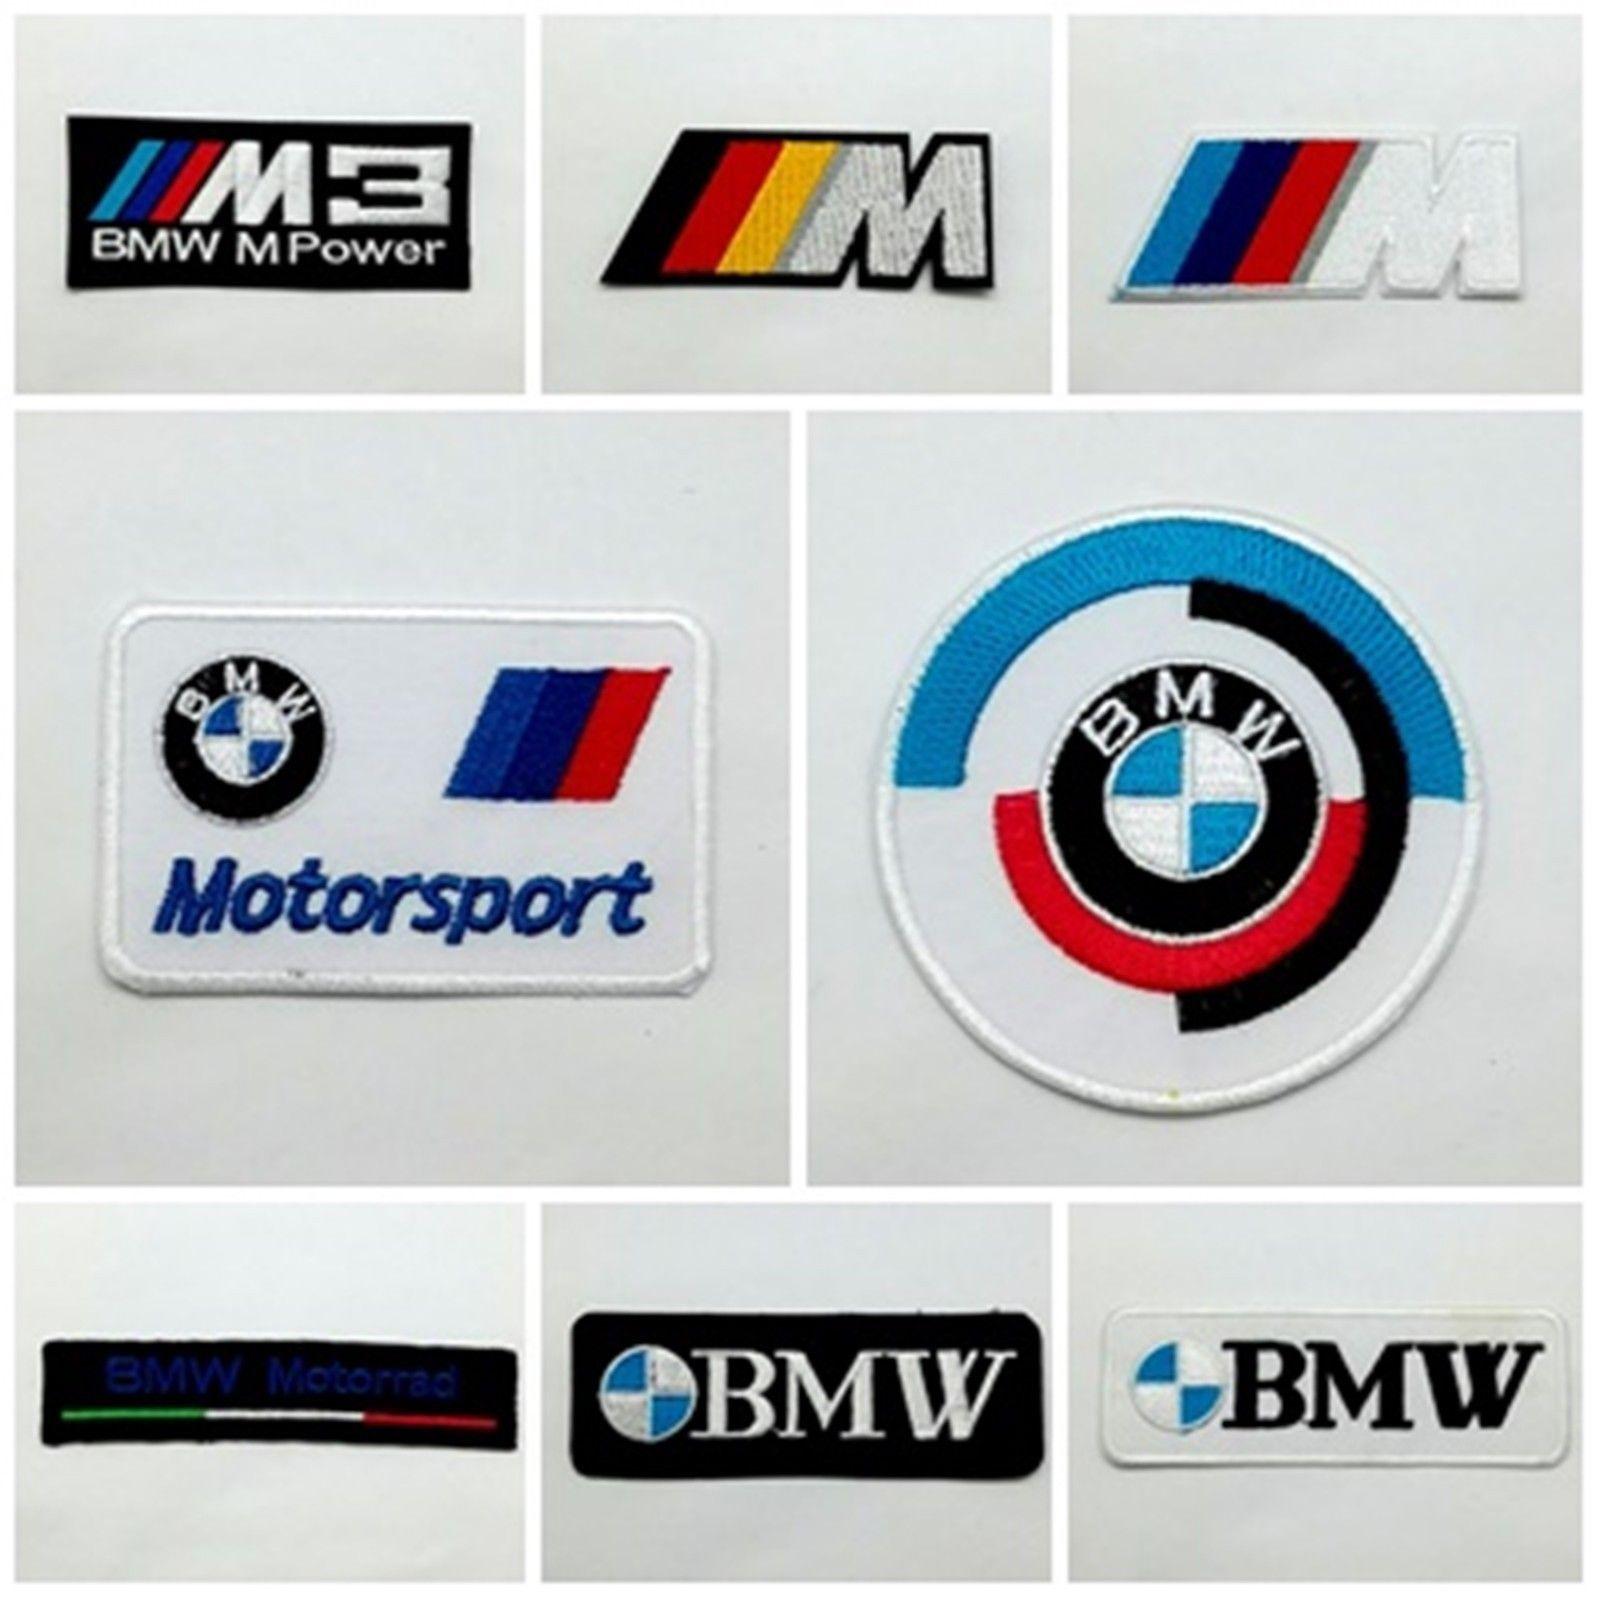 BMW M3 Power Logo - Amazing New BMW M3 M Power Motorsport Motorrad Racing Car Sew Iron on Patch  Cap Logo DIY 2018-2019